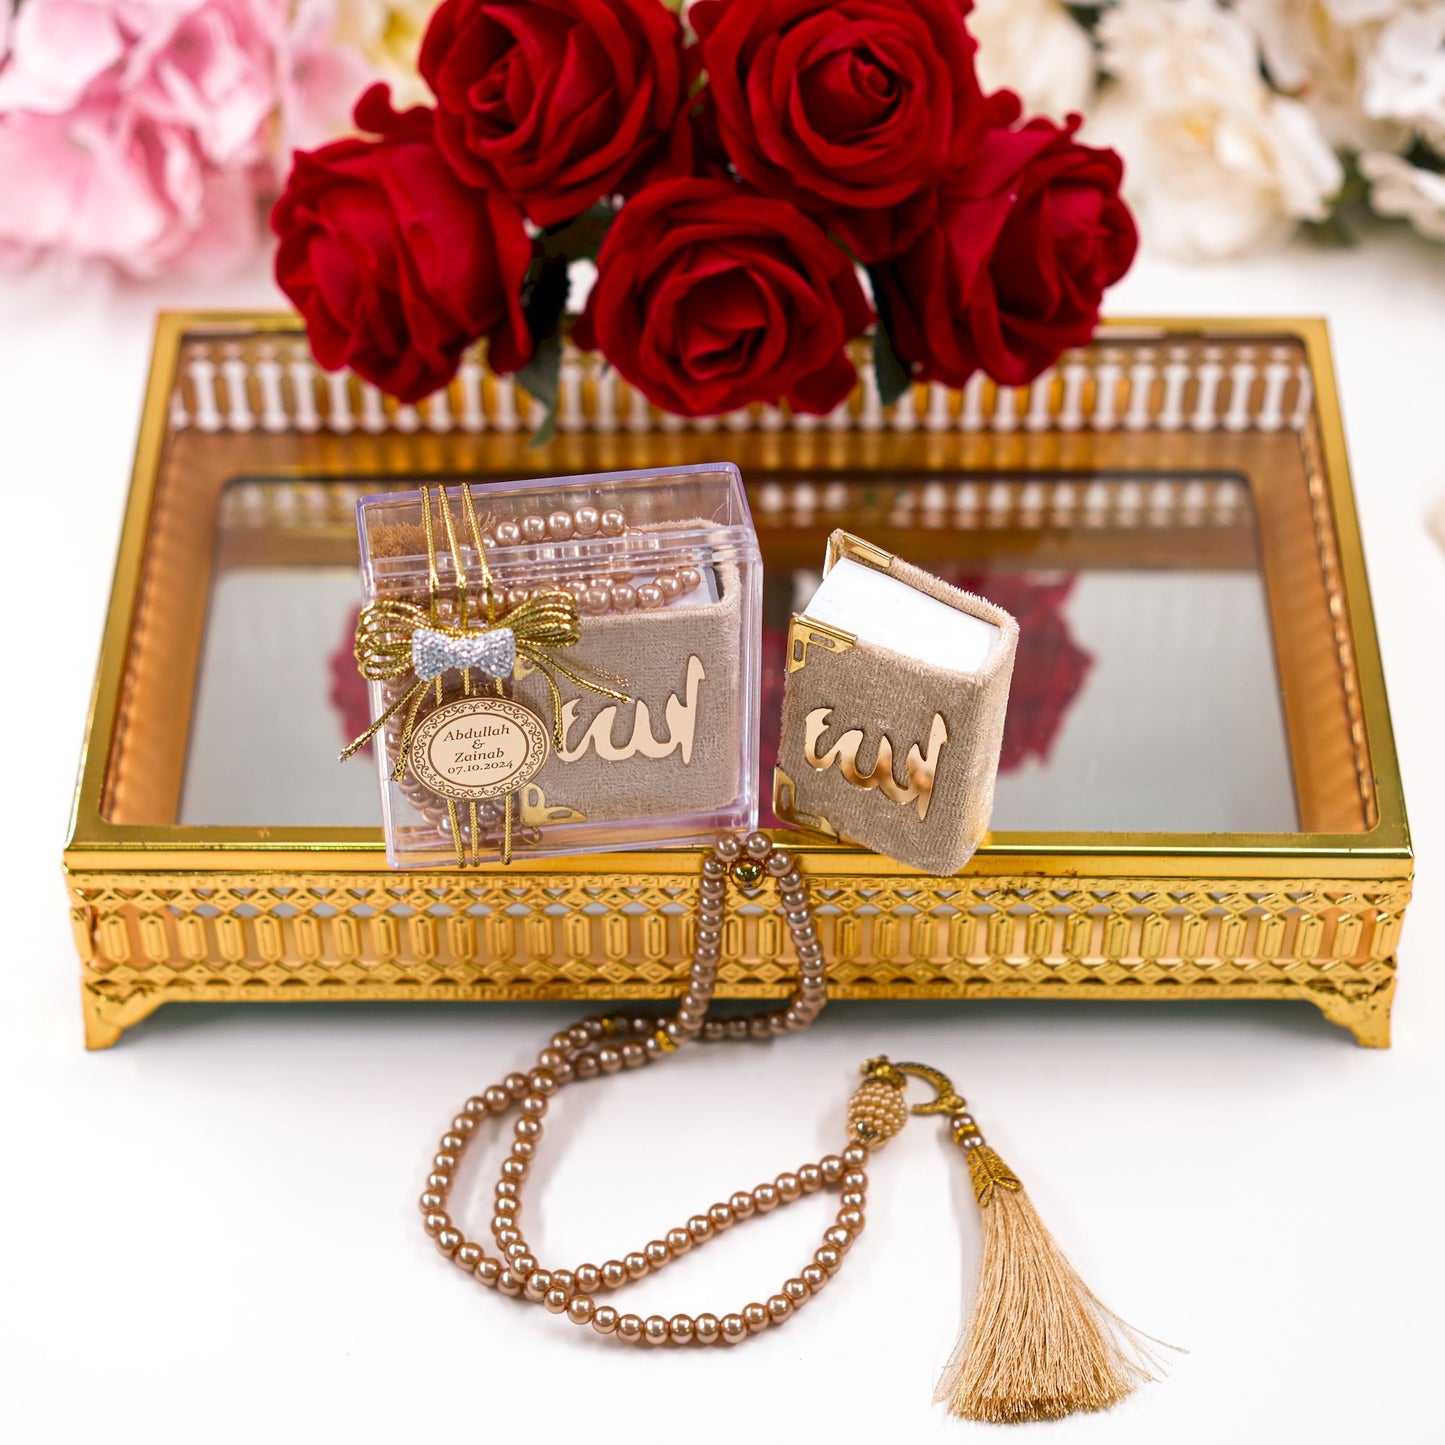 Personalized Mini Quran Prayer Beads Bow Tie with Plexi Wedding Favor